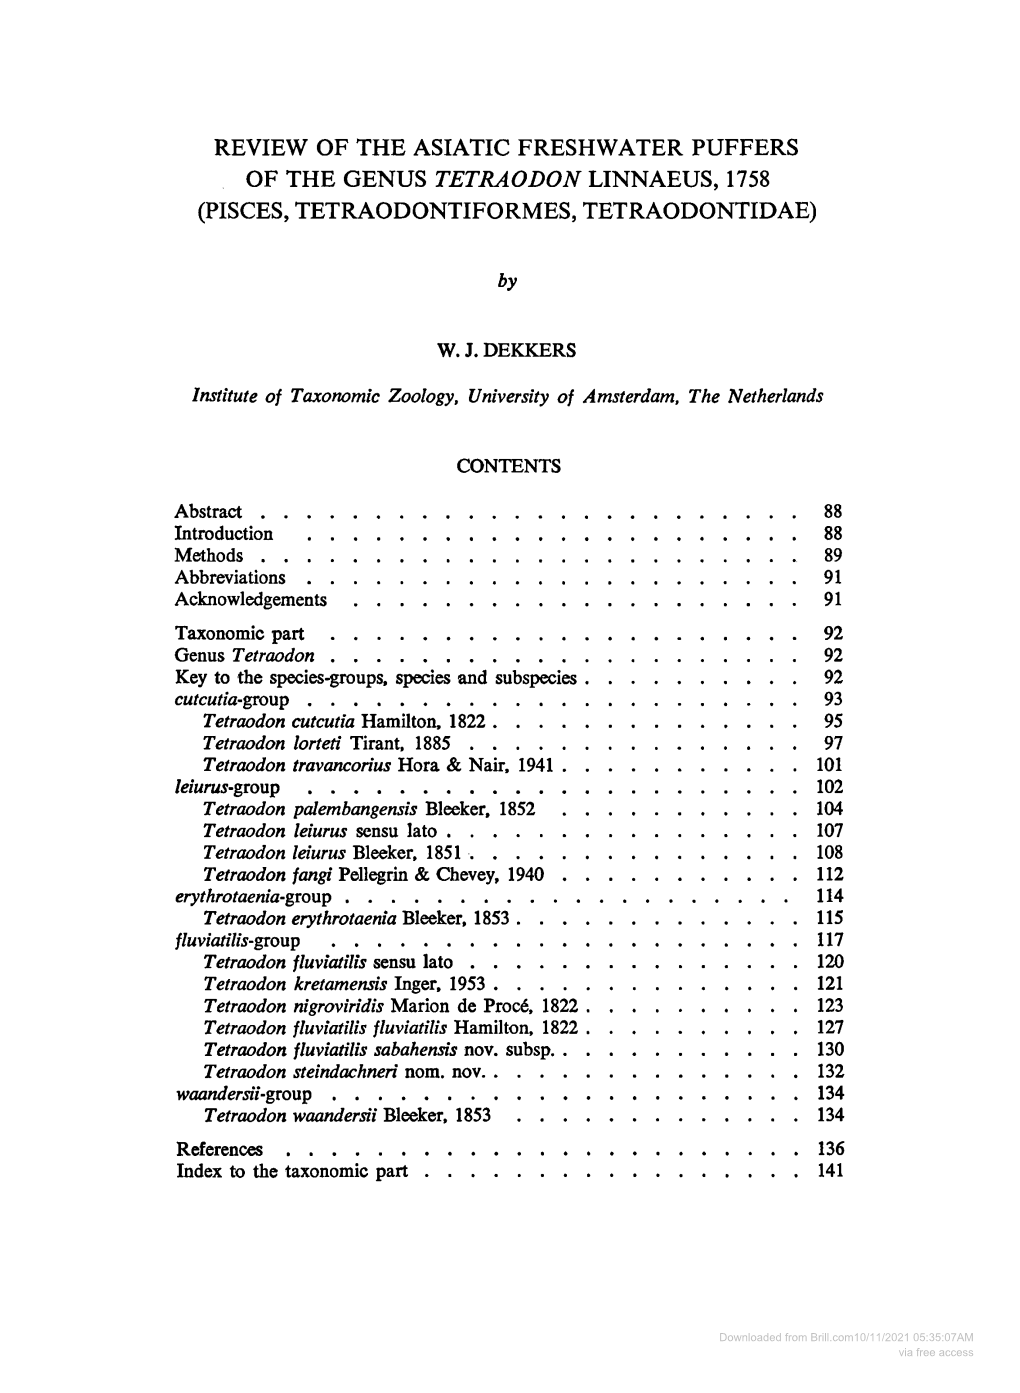 Review of the Asiatic Freshwater Puffers of the Genus Tetraodon Linnaeus, 1758 (Pisces, Tetraodontiformes, Tetraodontidae)